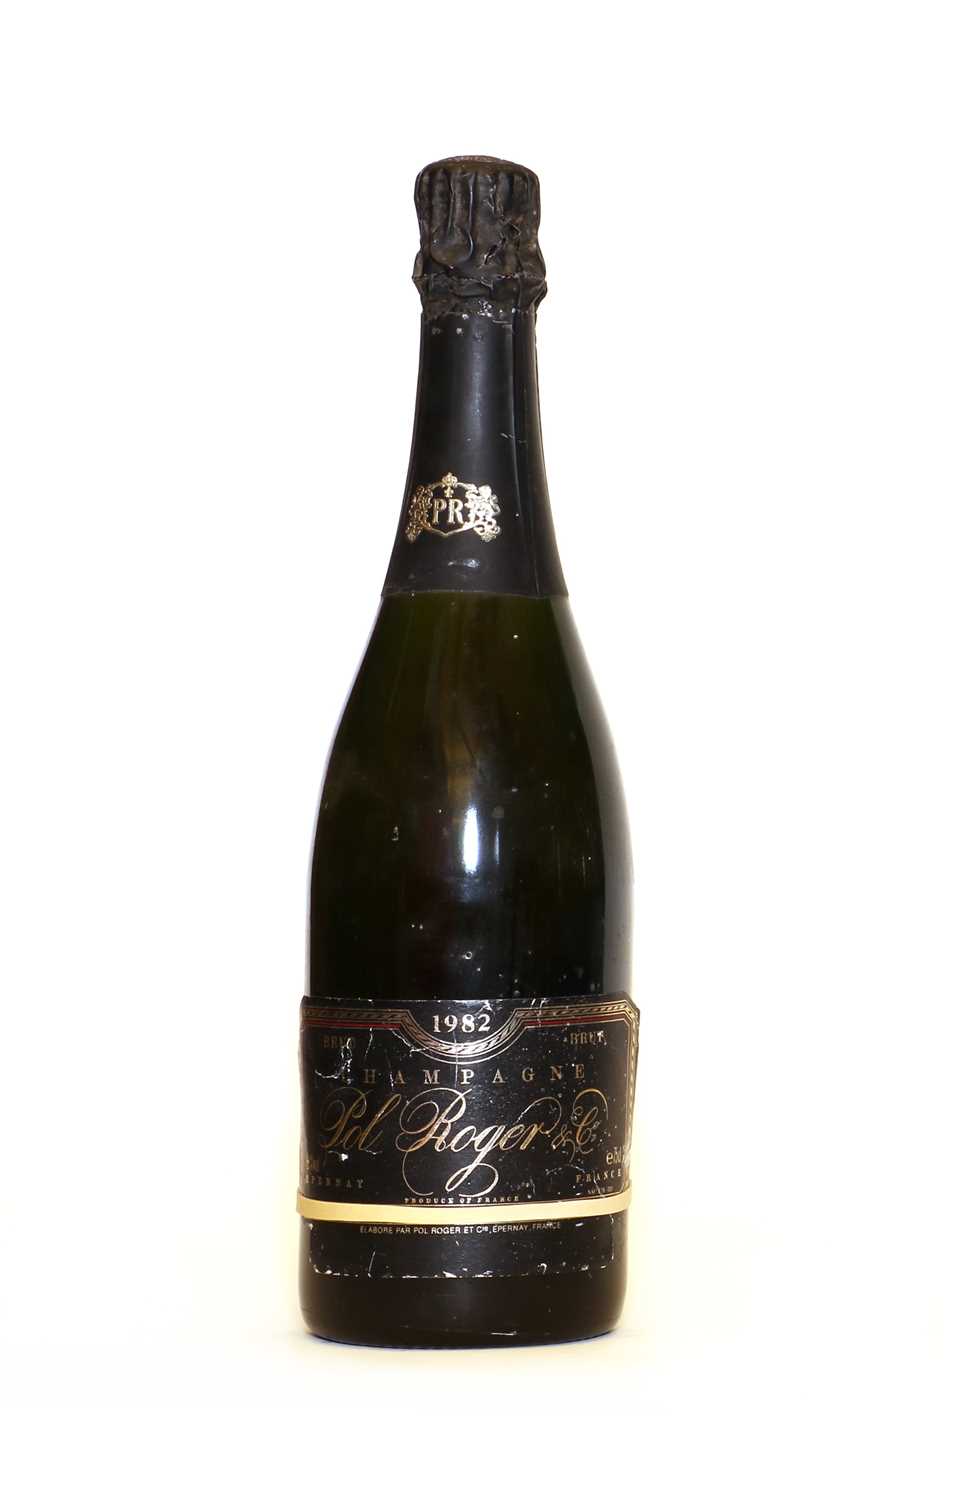 Lot 5 - Pol Roger, Sir Winston Churchill, Epernay, 1982, one bottle (neck label lacking)